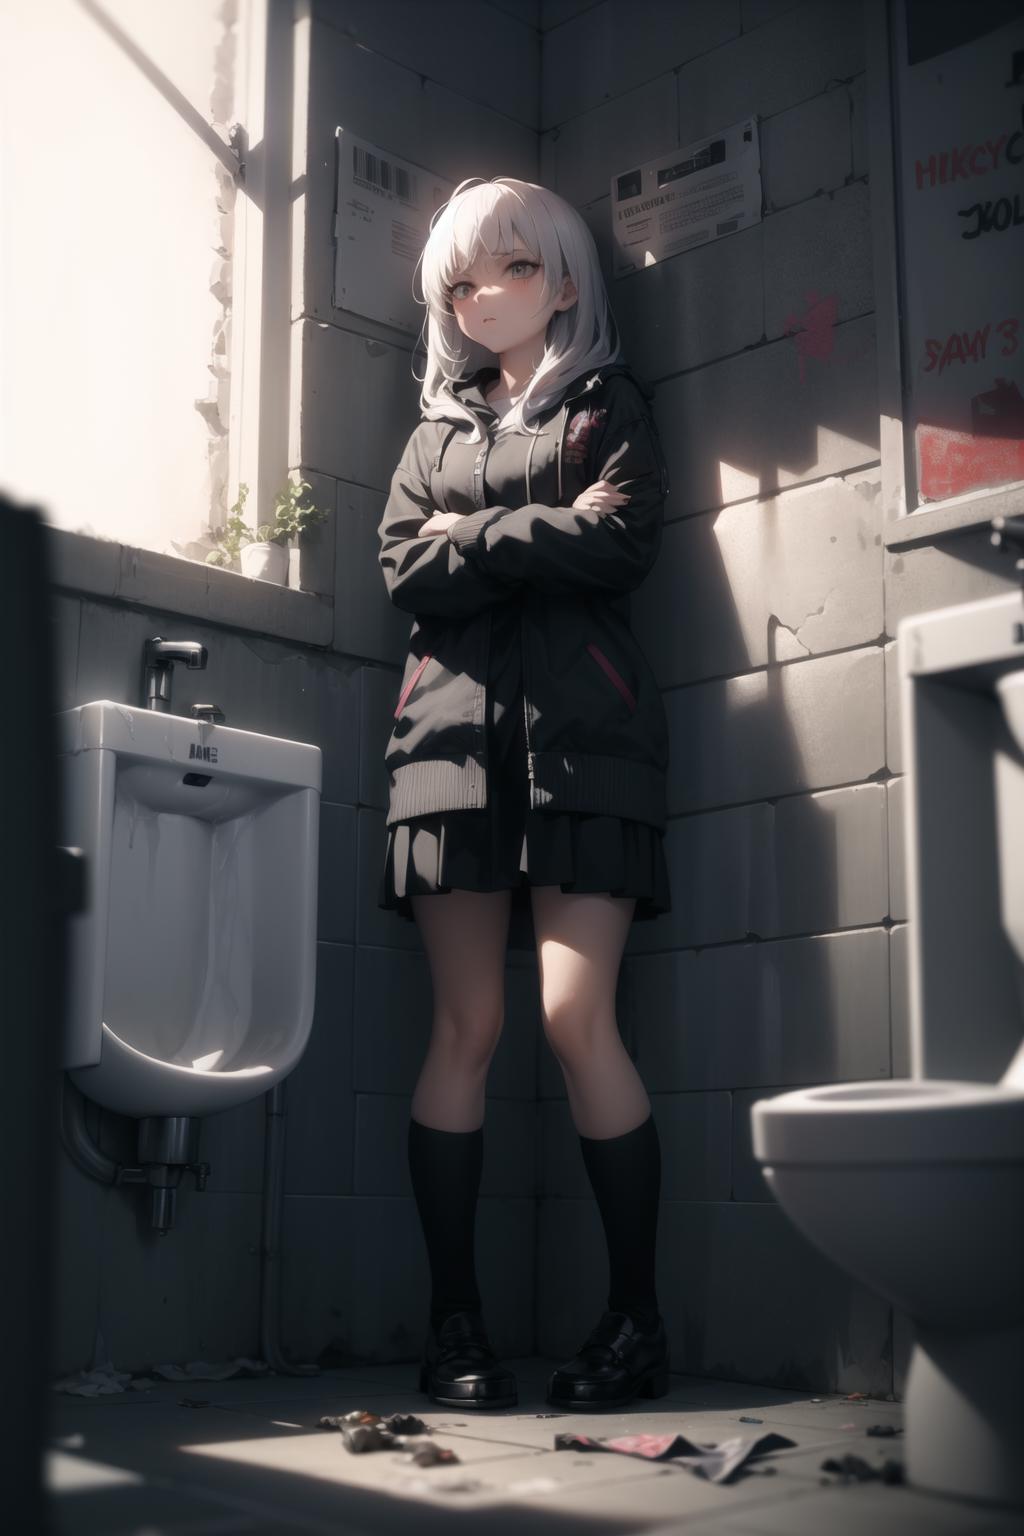 Public restroom image by psoft